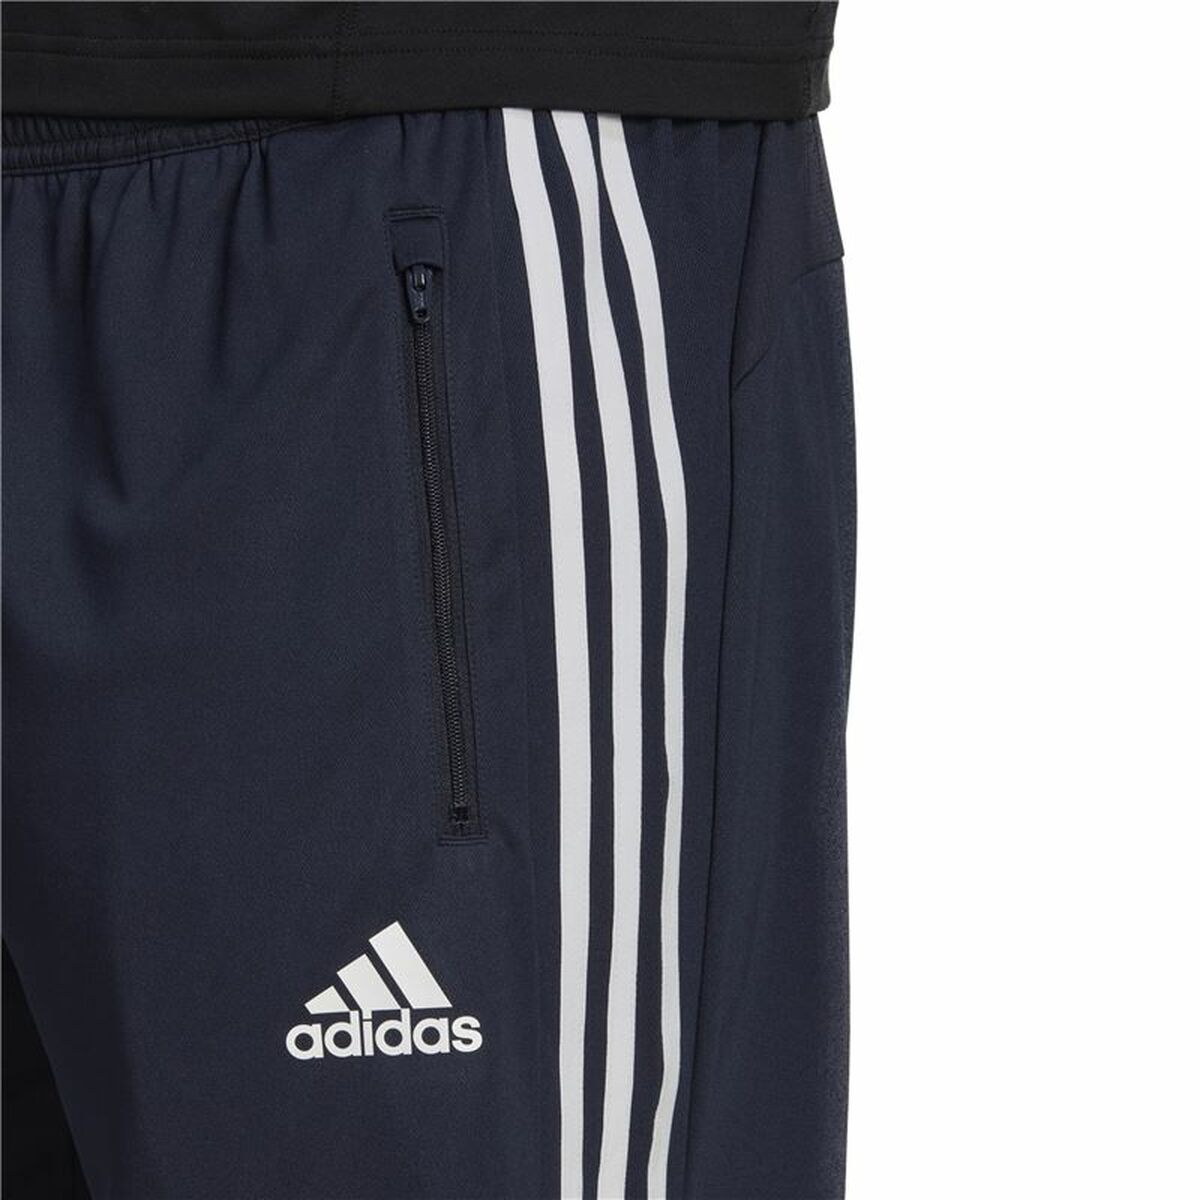 Men's Sports Shorts Adidas Designed to Move Dark blue